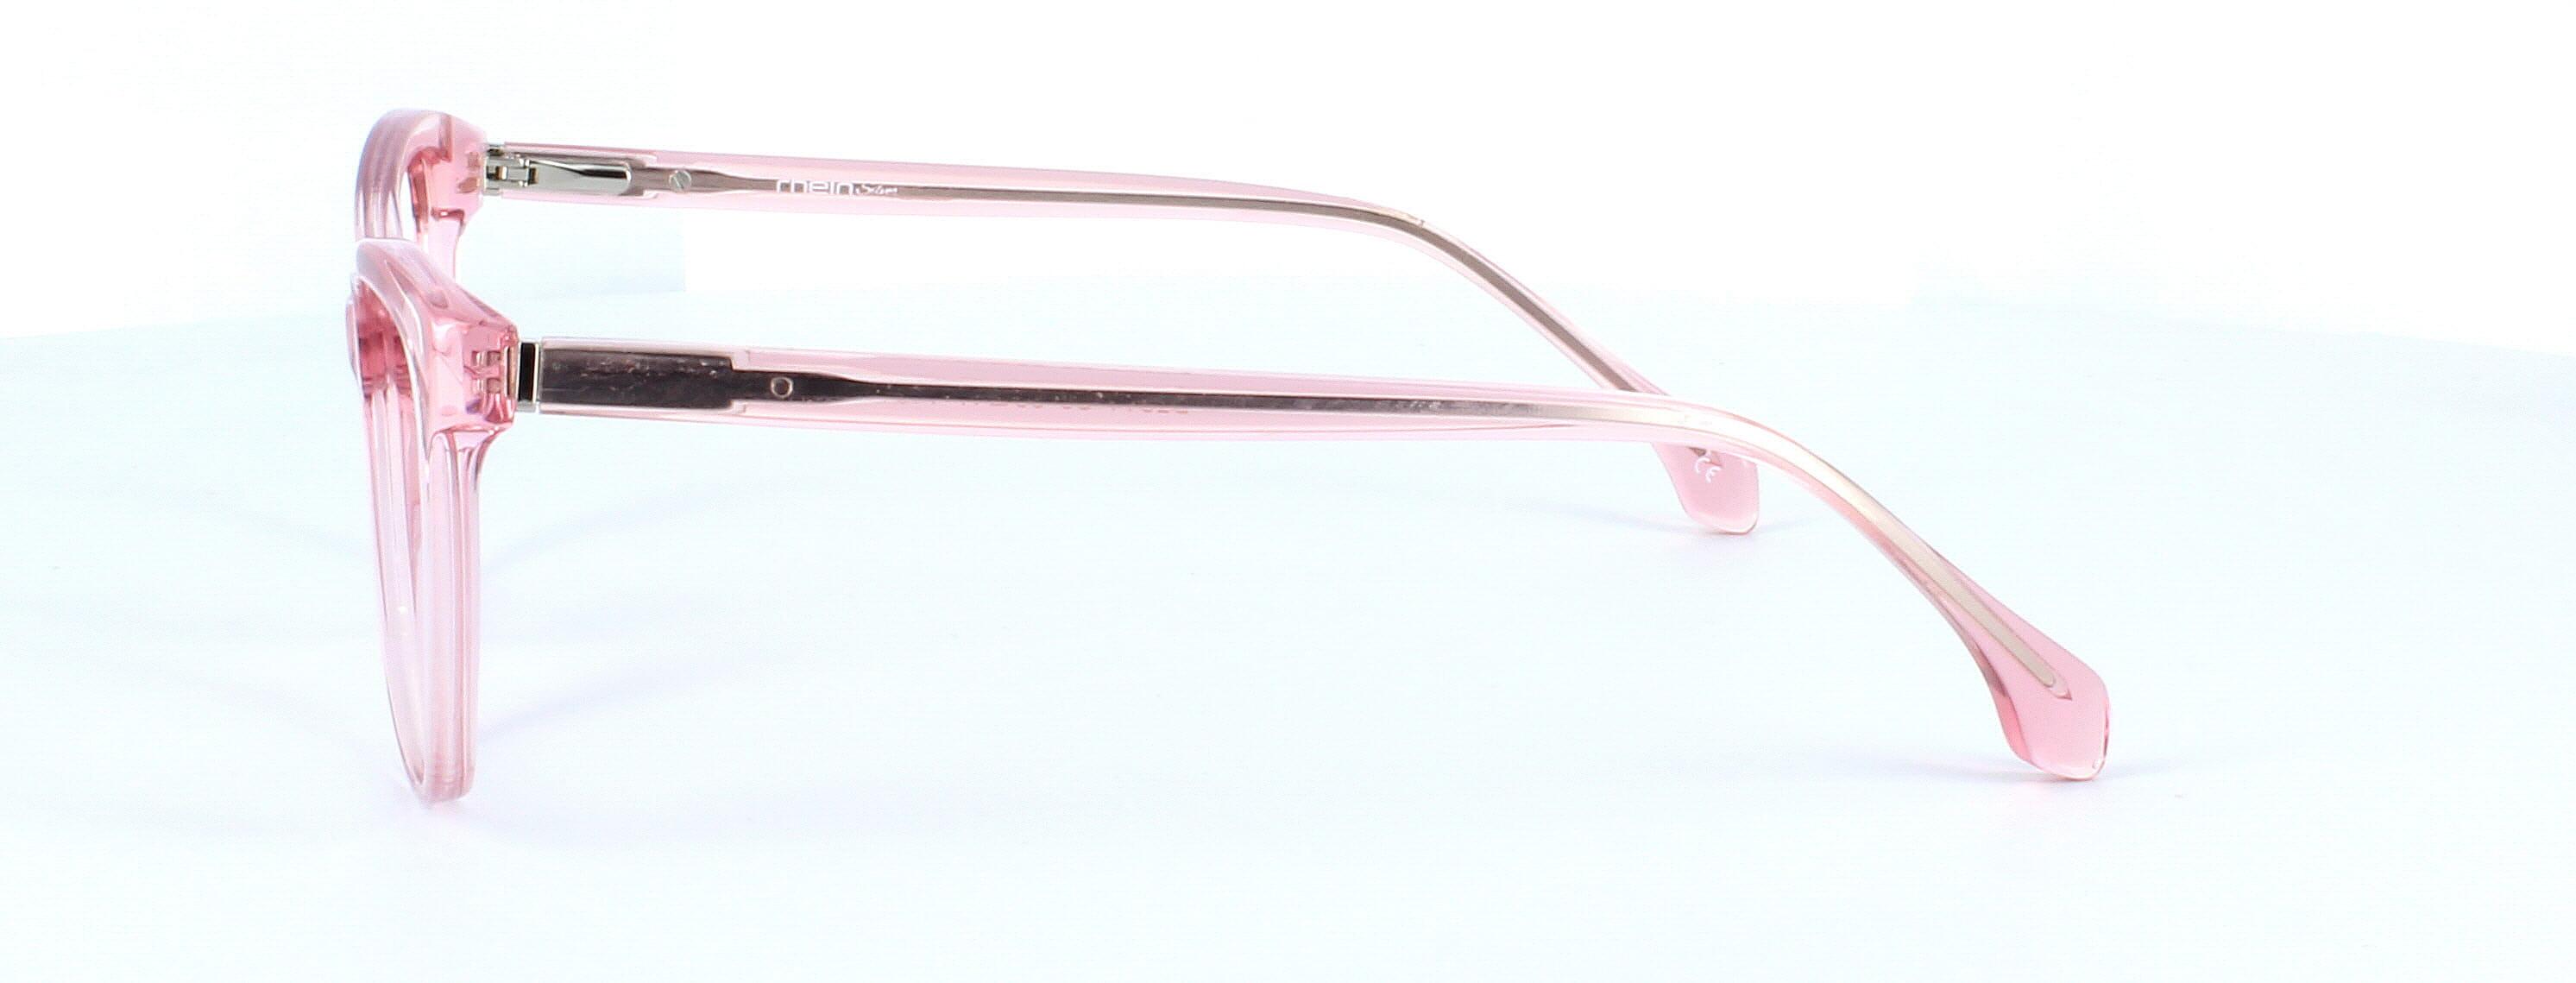 Hadlow - Ladies crystal pink cat eye shaped acetate glasses frame - image view 2